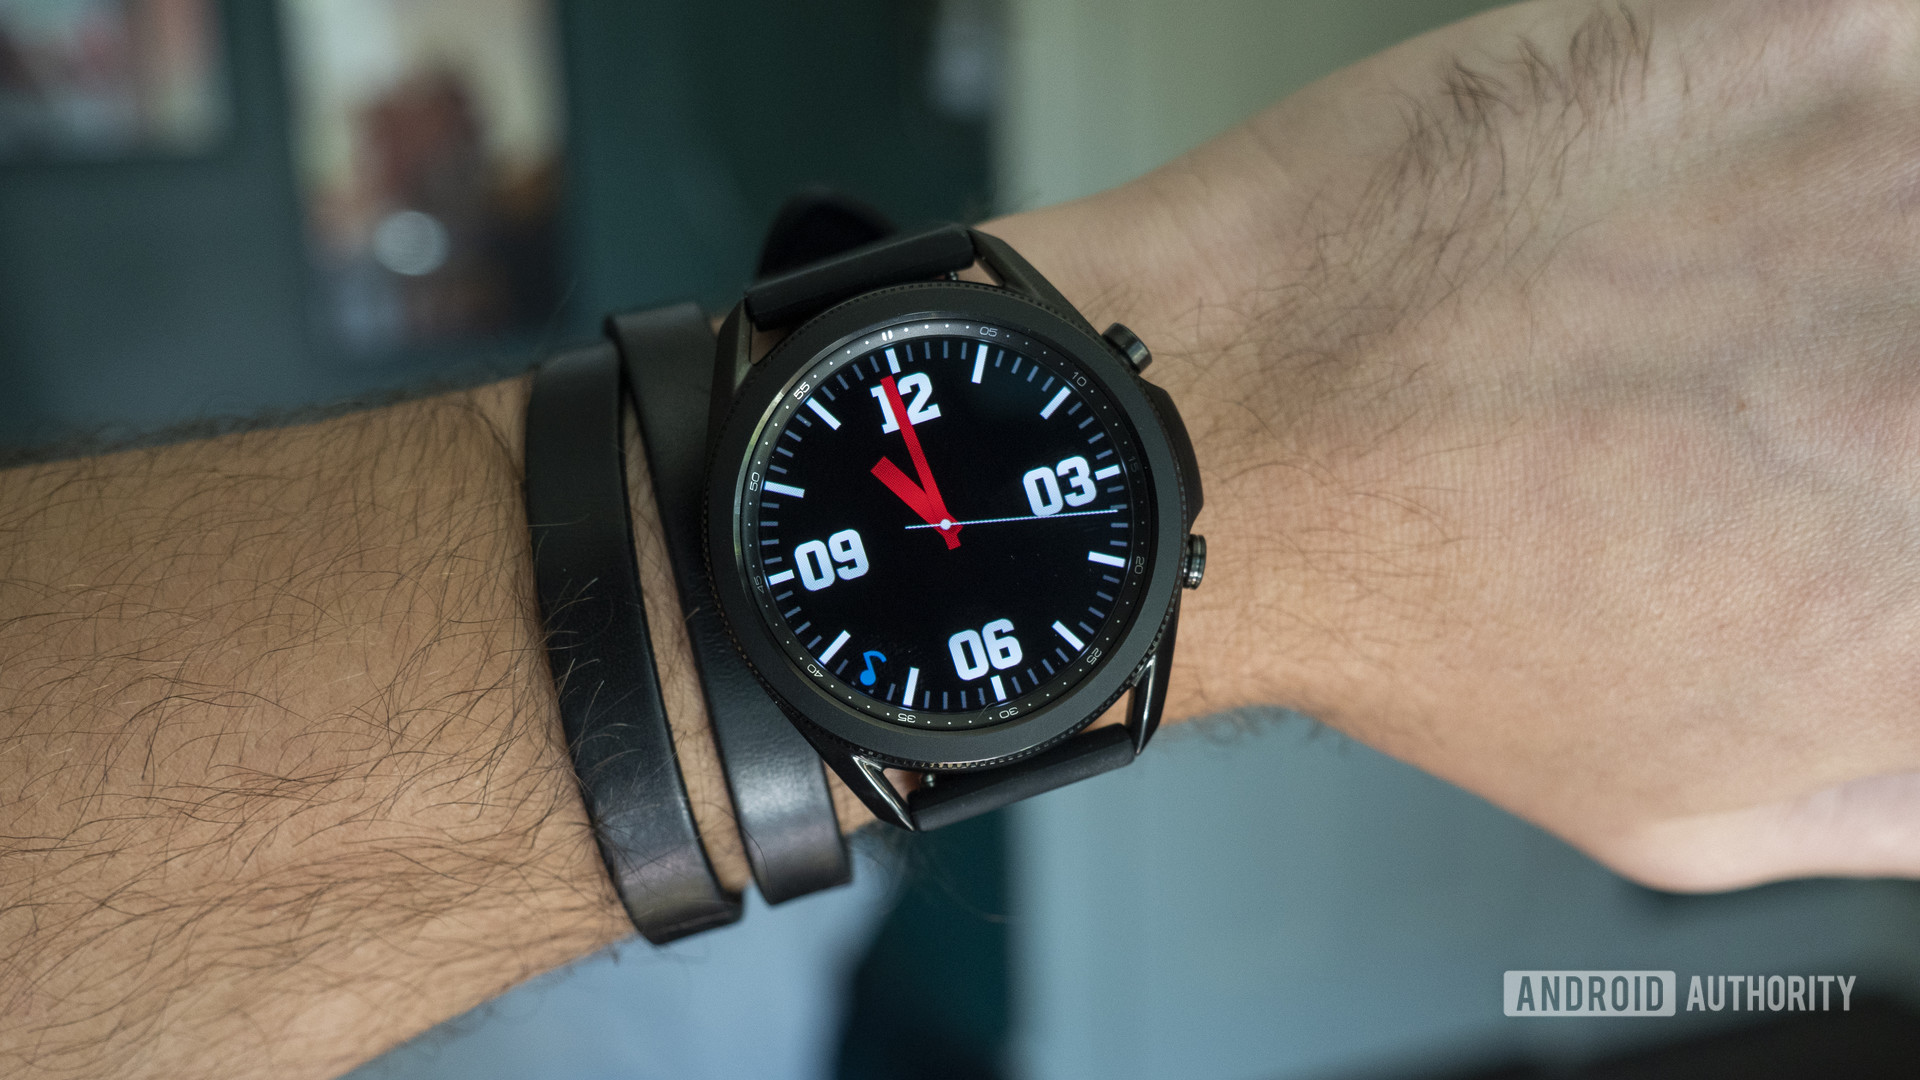 Saturar Selección conjunta director Should Samsung make a Galaxy Watch with Wear OS? - Android Authority